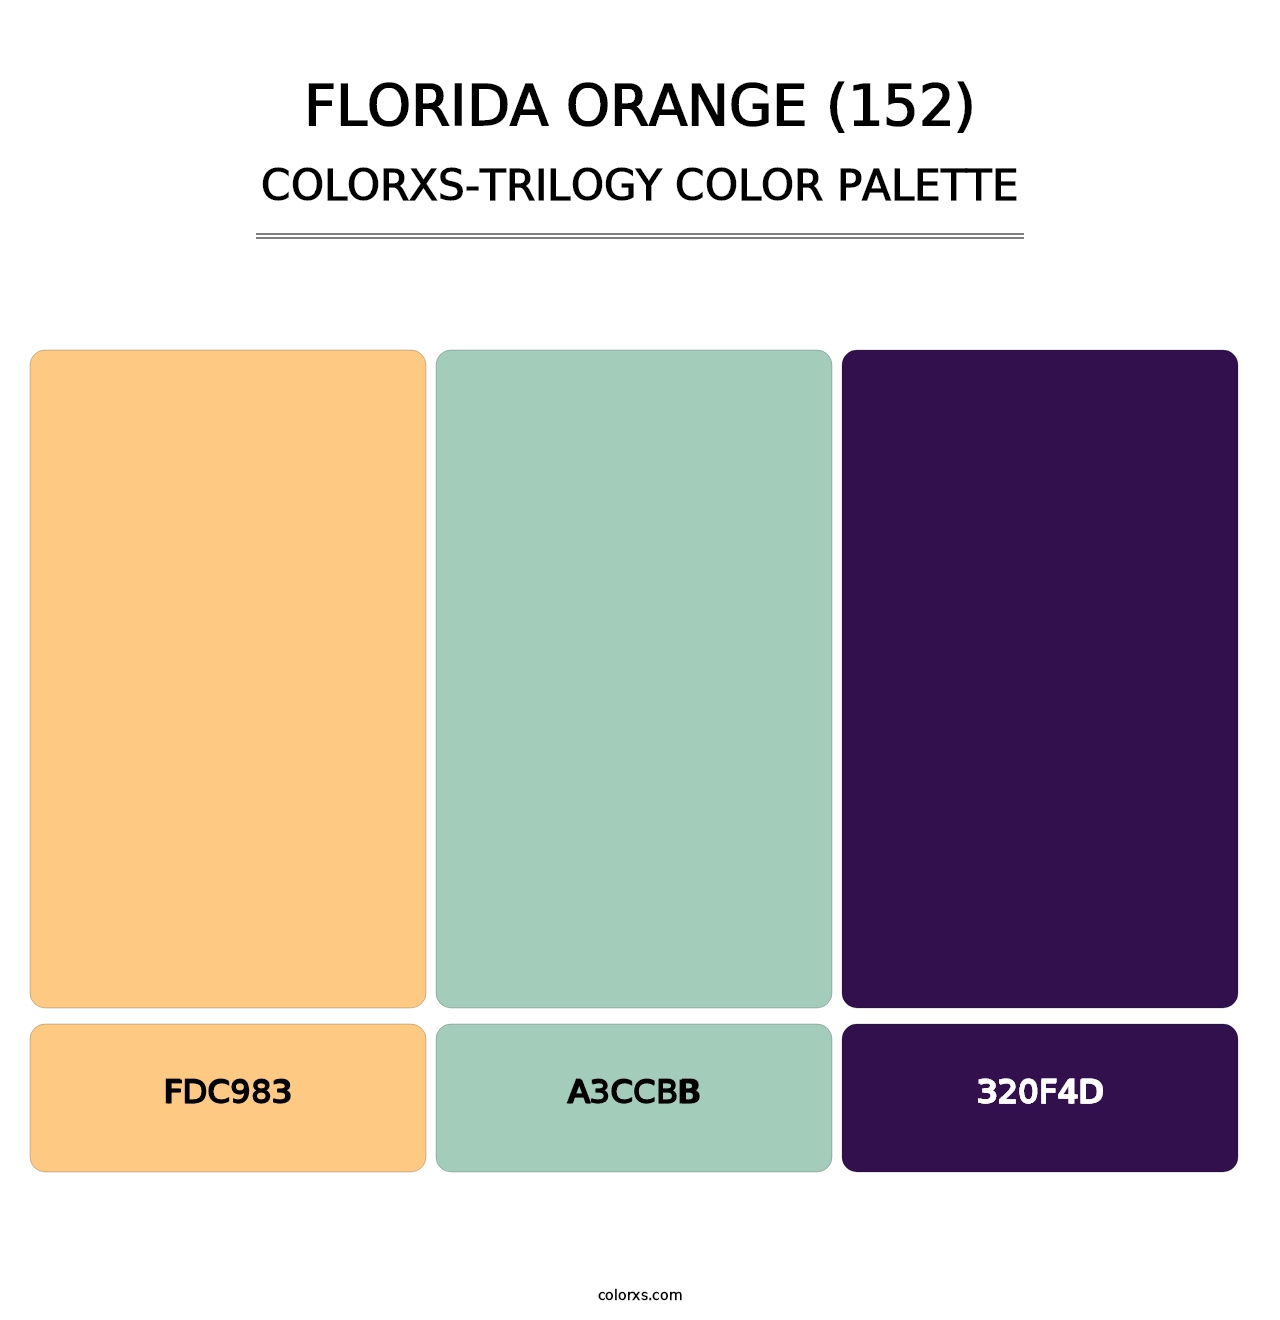 Florida Orange (152) - Colorxs Trilogy Palette